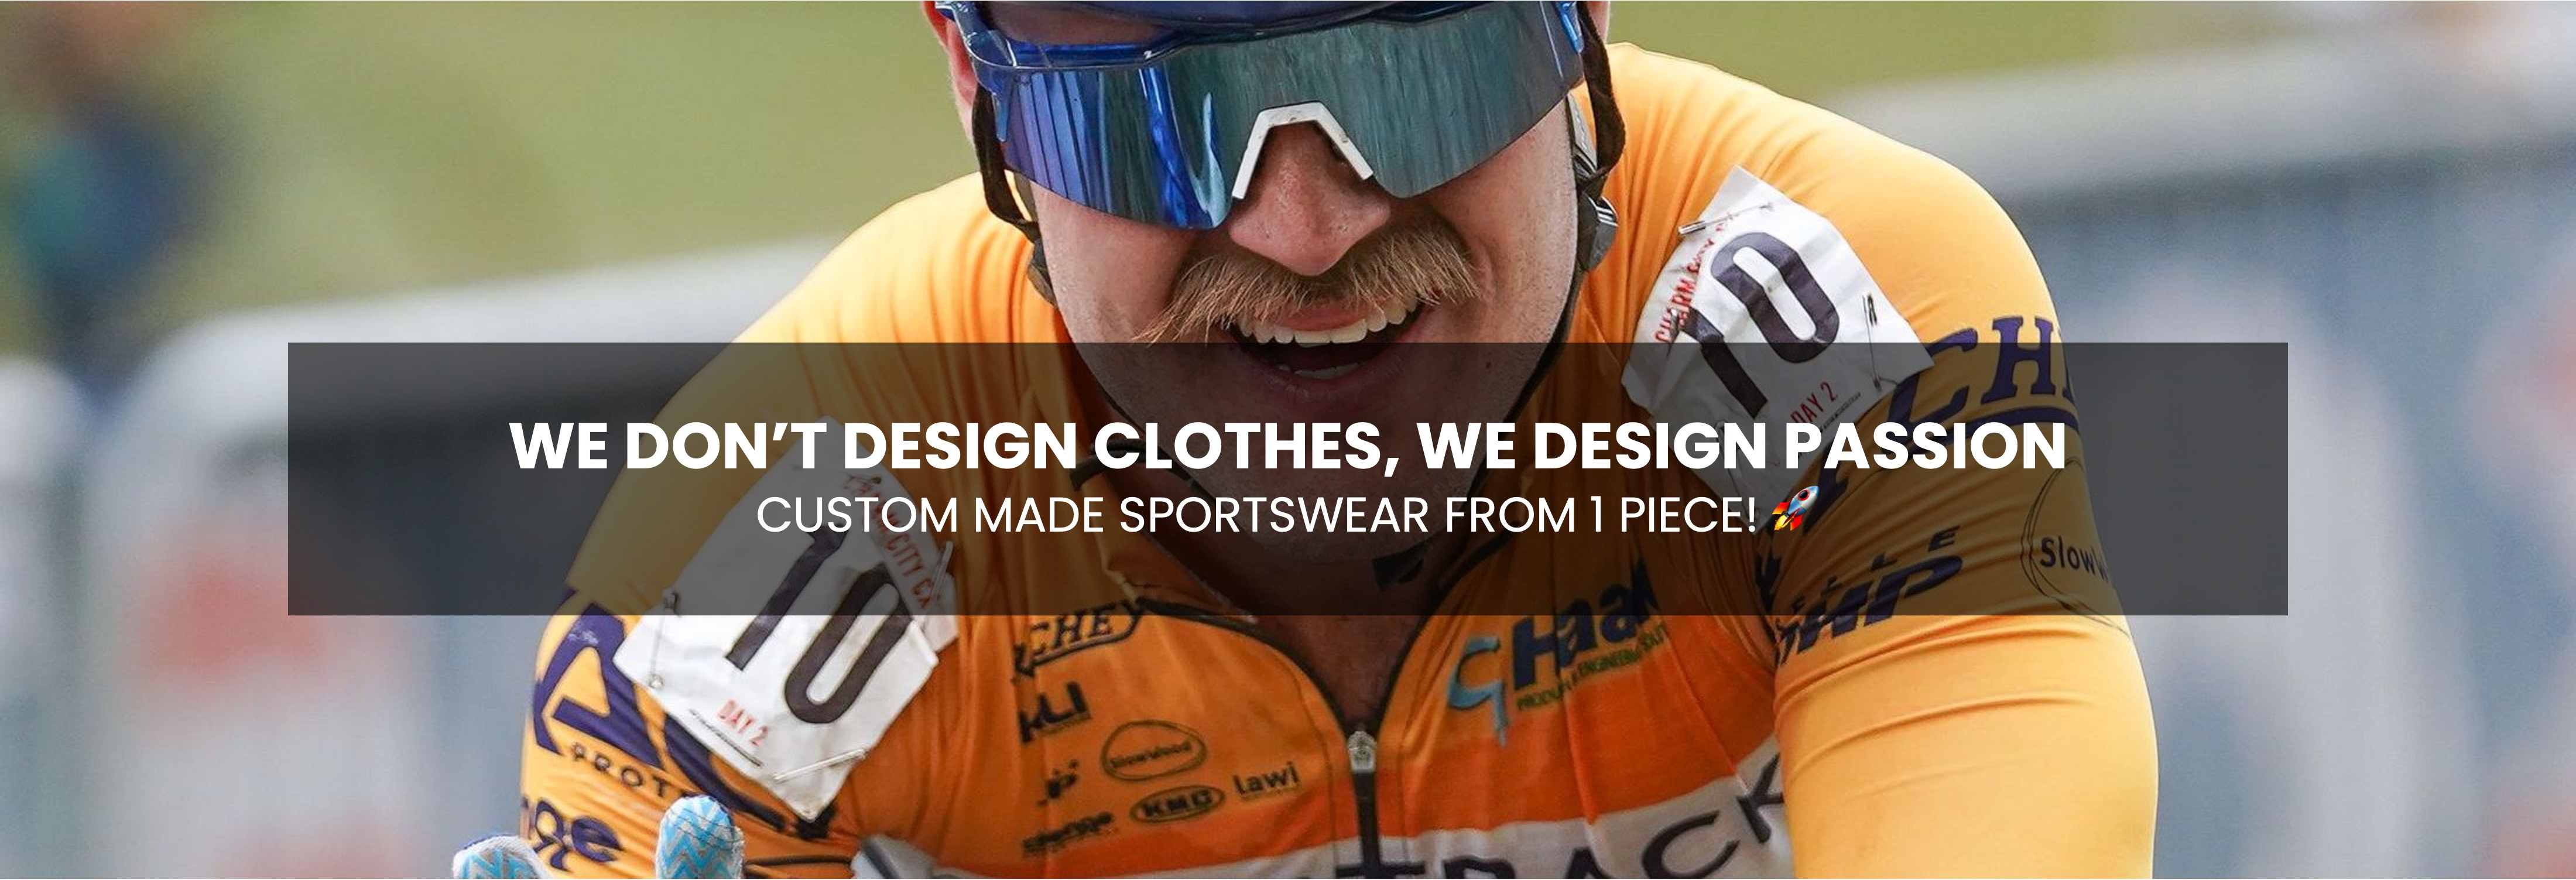 Custom made sportswear from 1 piece! ✅